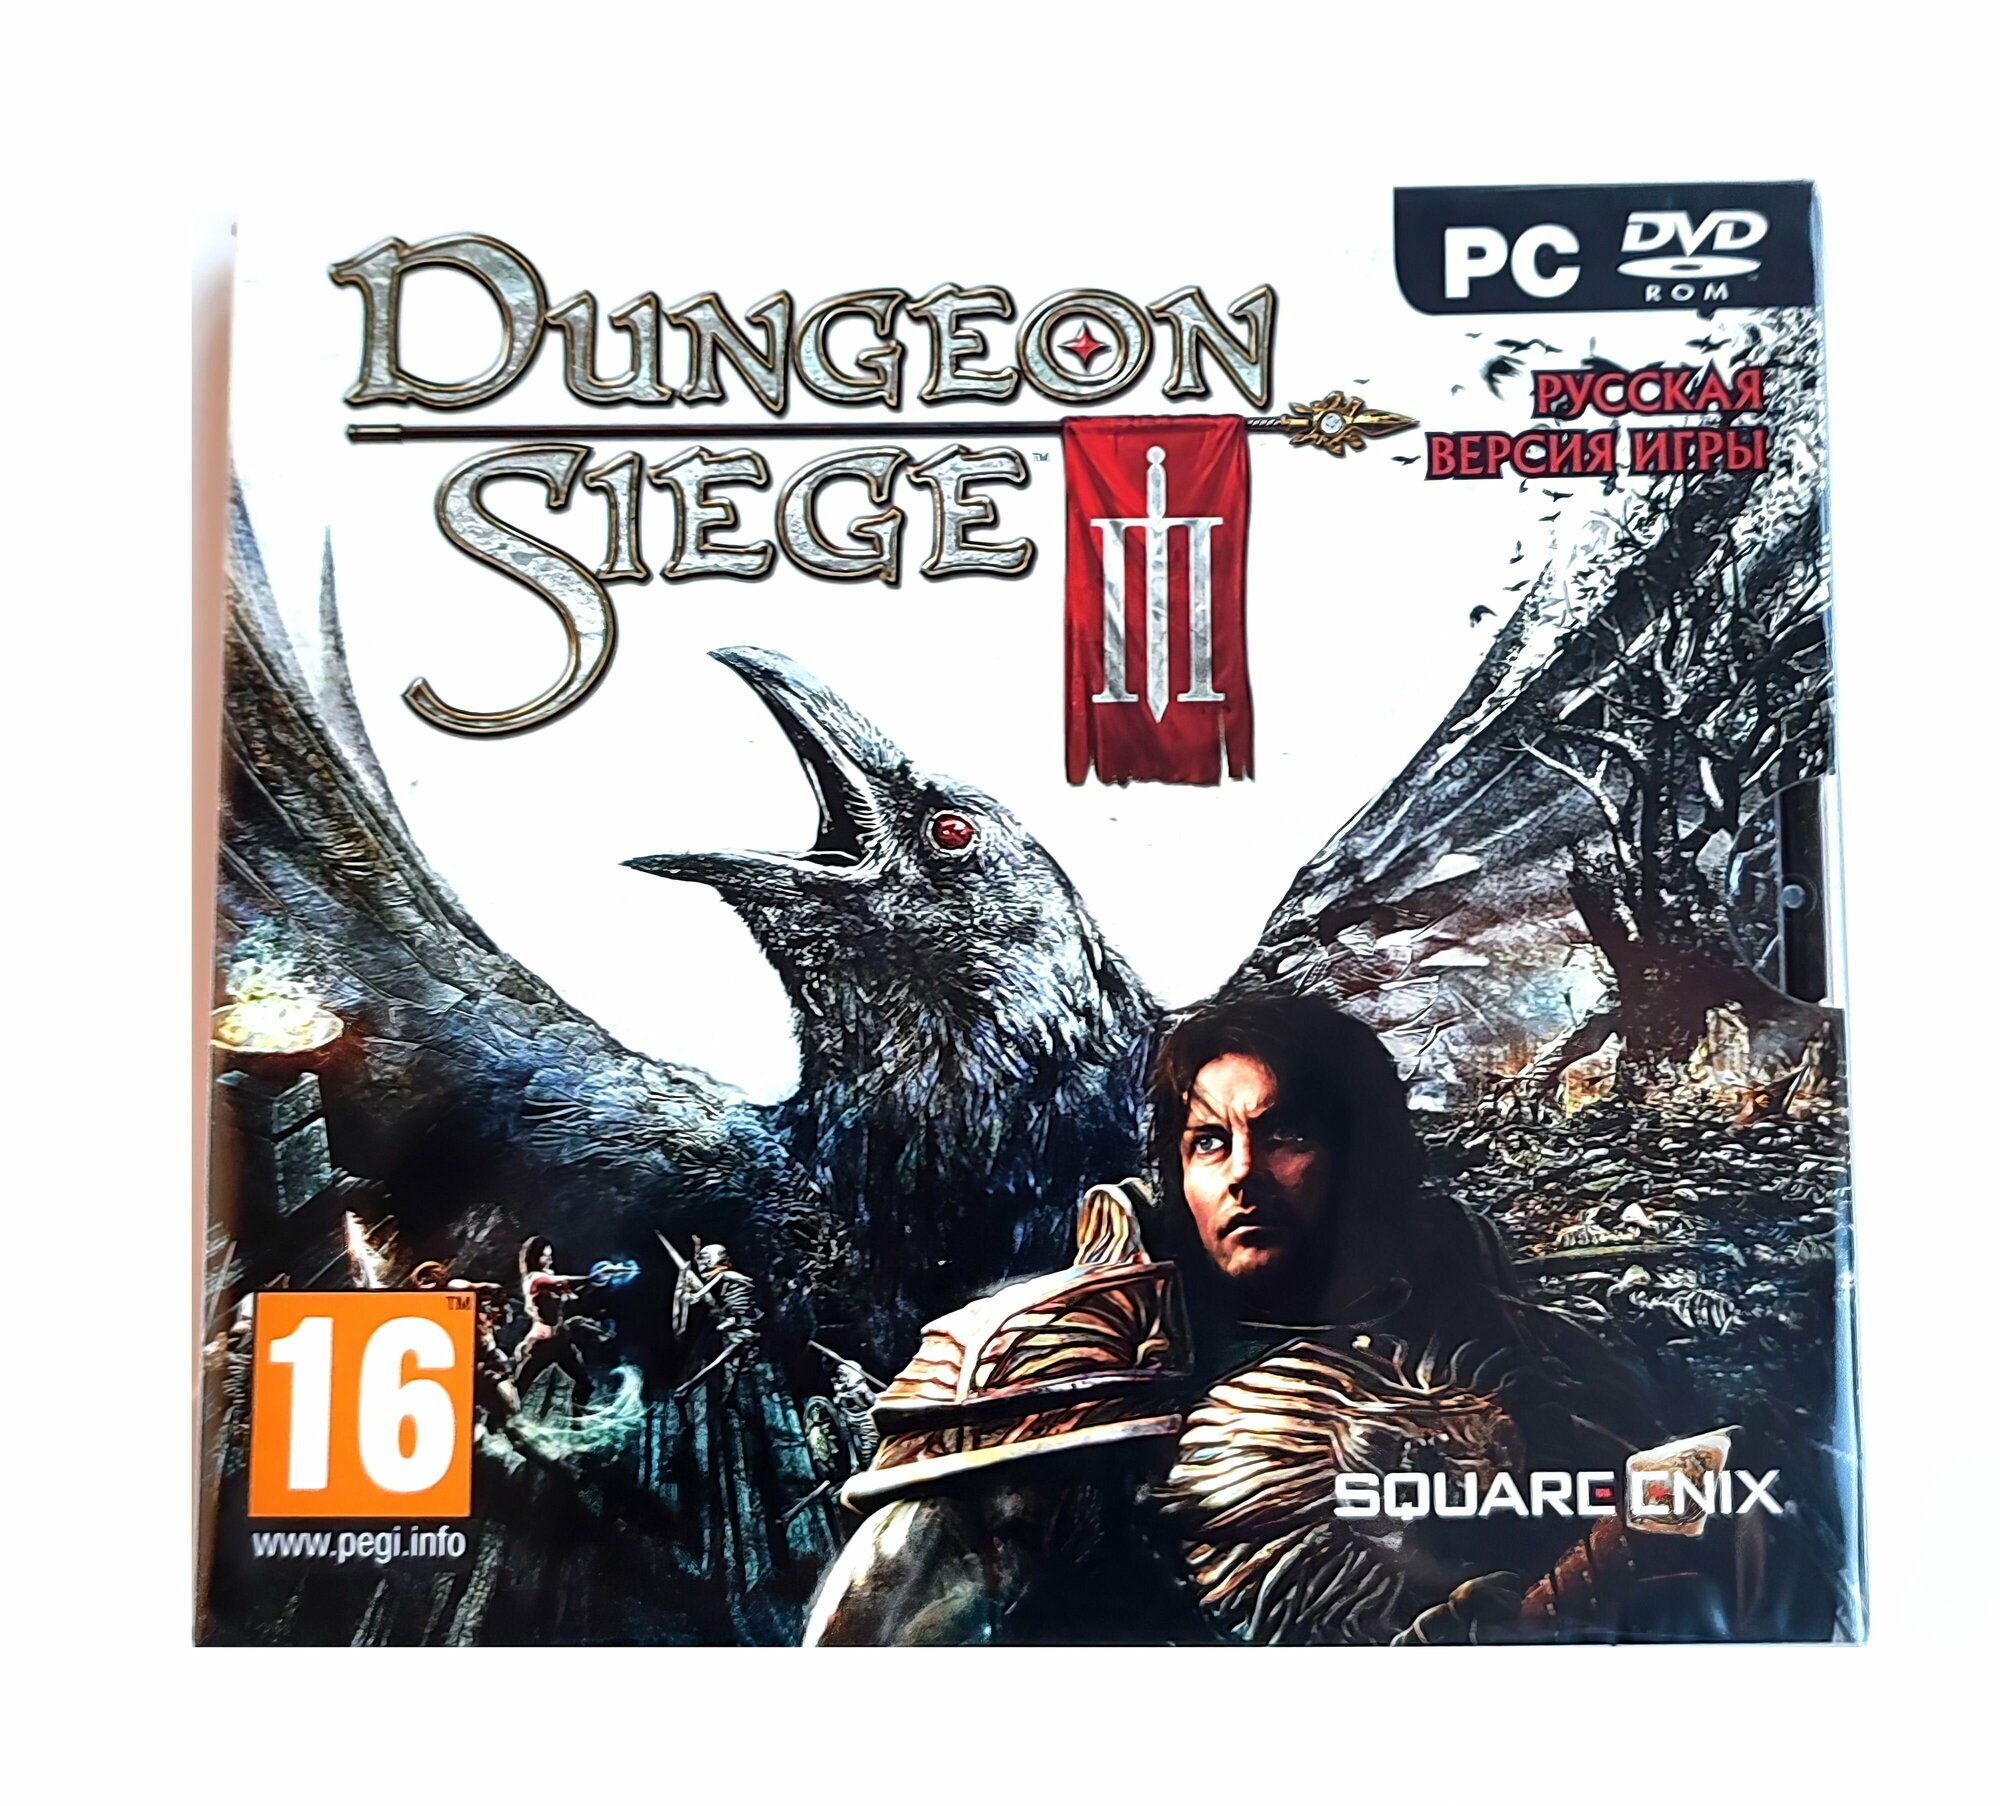 Видеоигра. DUNGEON SIEGE 3 (2011, Jewel, PC-DVD, для Windows PC, Steam, русская версия) экшен, RPG / 16+